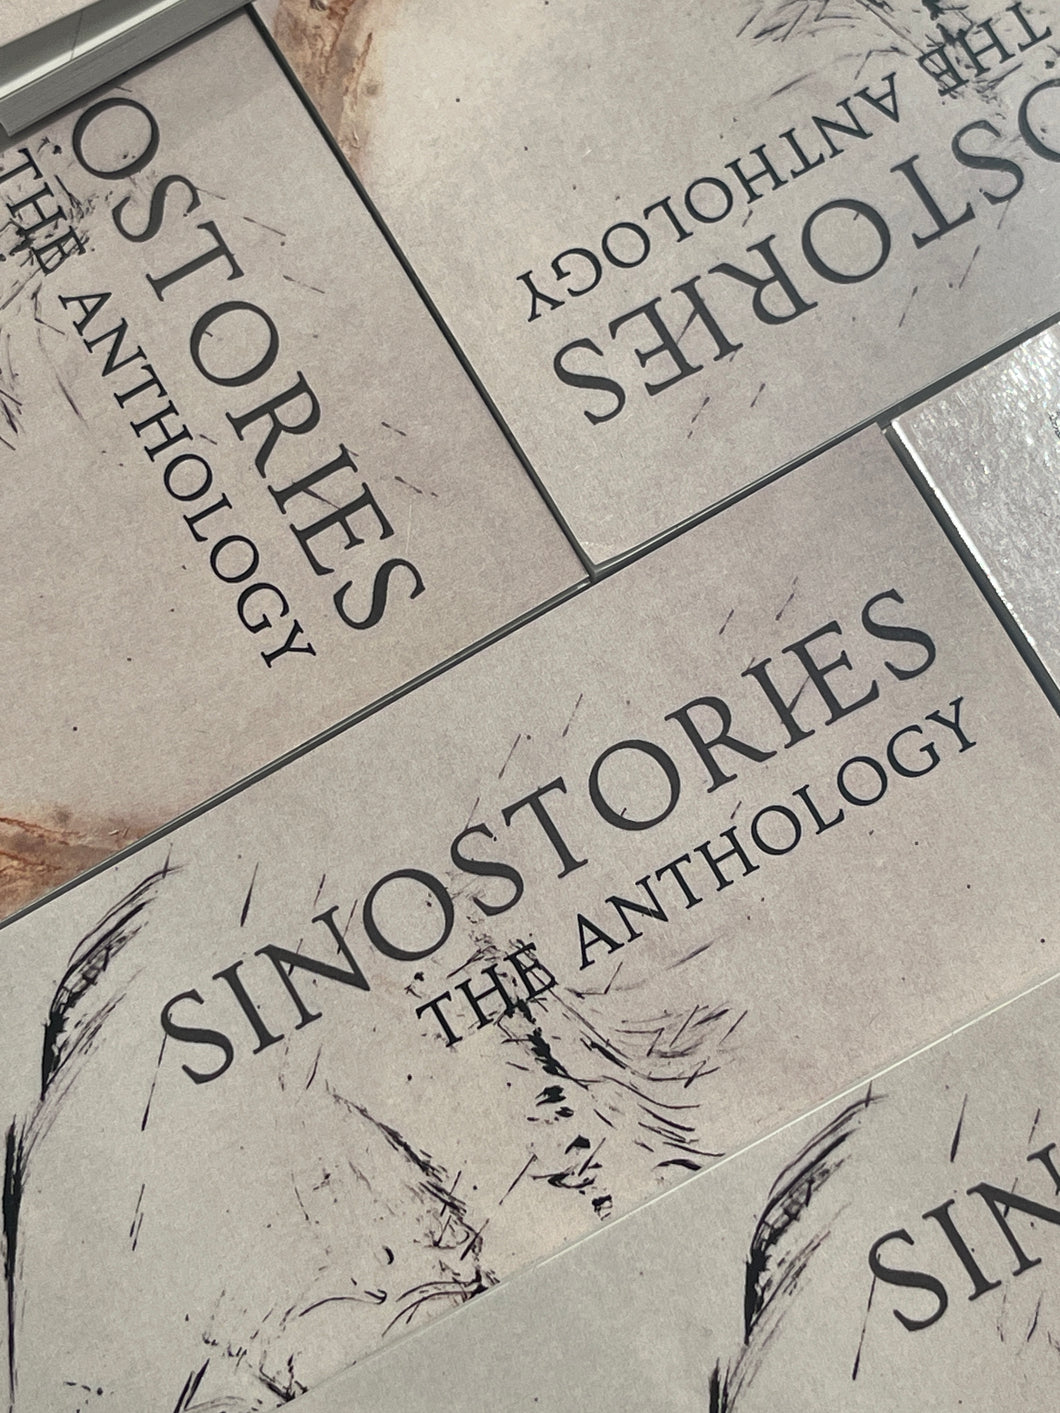 SINOSTORIES | the book